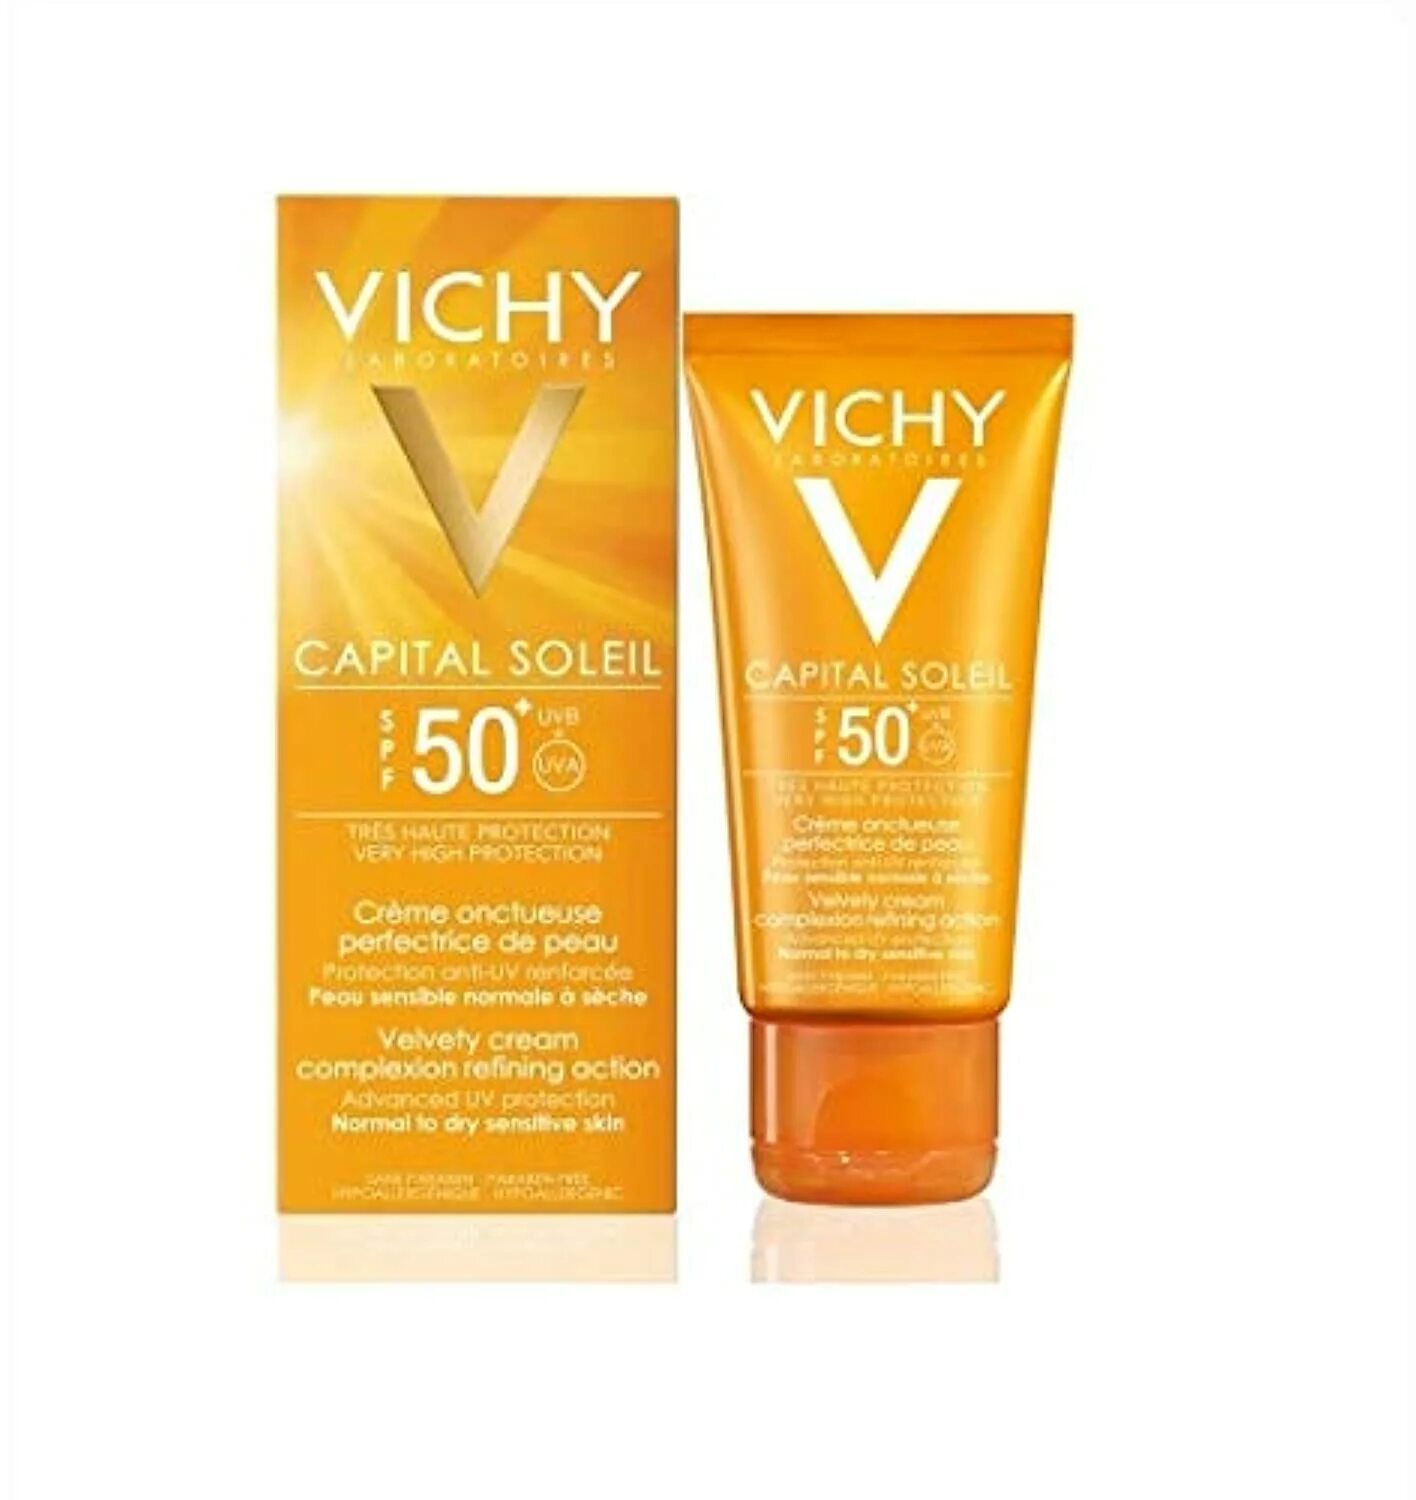 Vichy capital soleil spf 50 отзывы. Vichy SPF 50. Vichy Sunscreen spf50 Capital Soleil velvety Cream 50ml. Виши идеал солей 50. Виши Солейл 50.